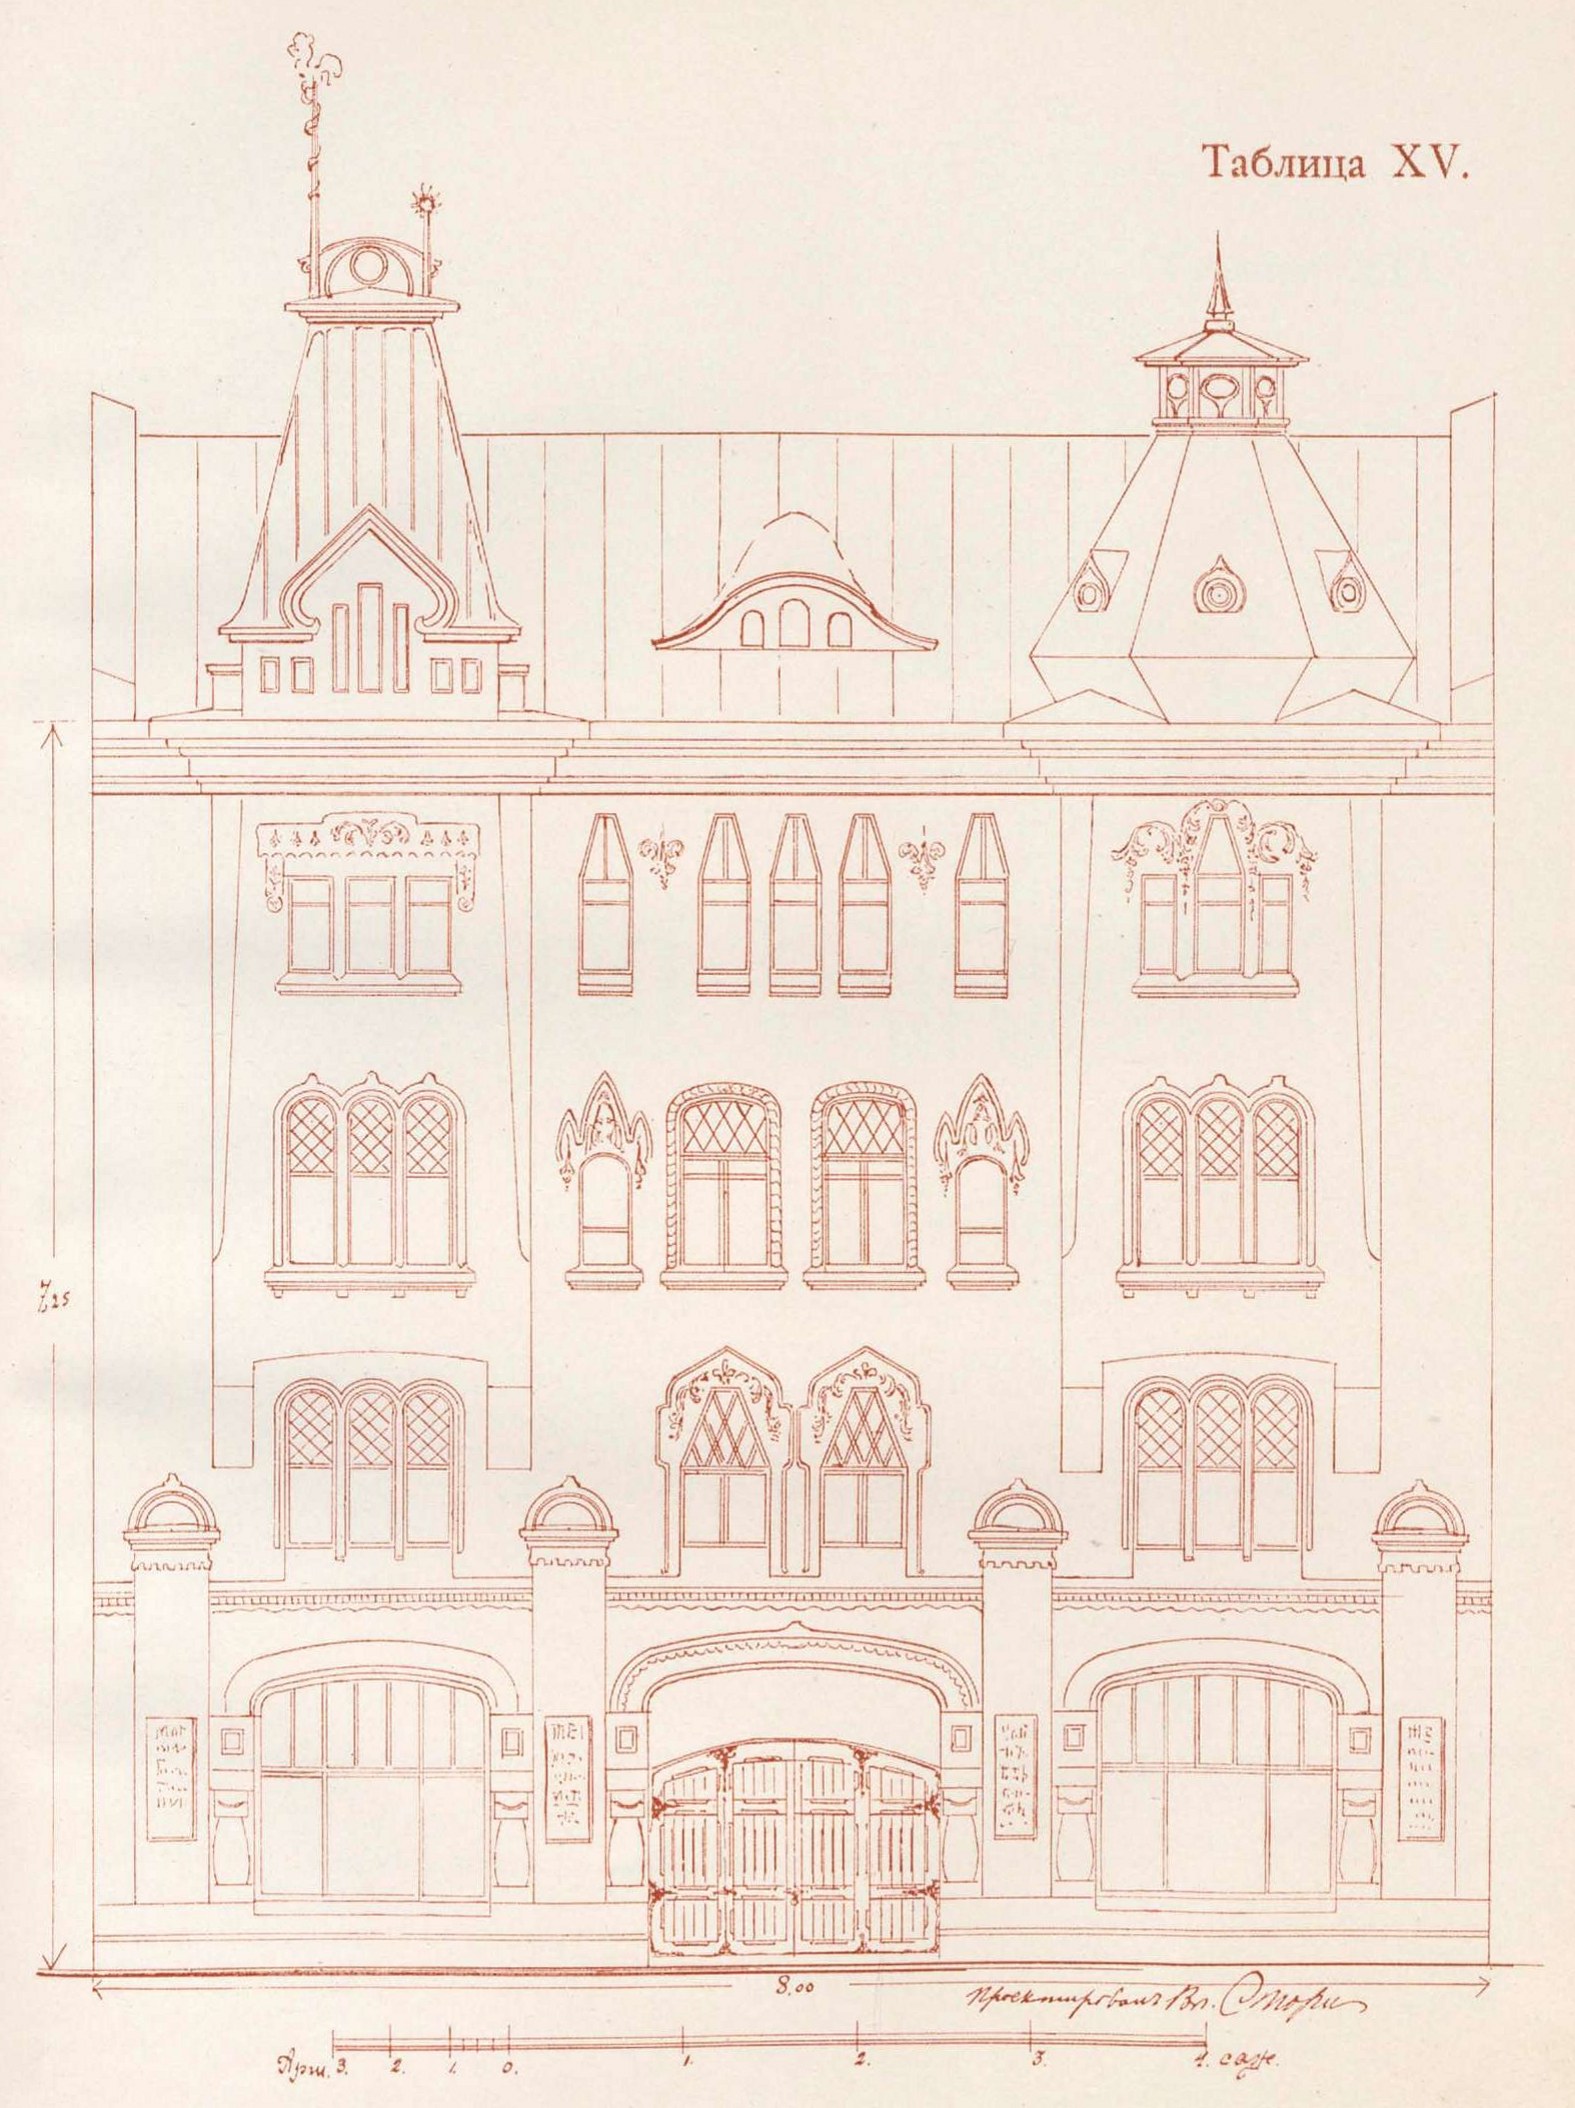 Таблица XV. Фасад доходного дома в русском стиле